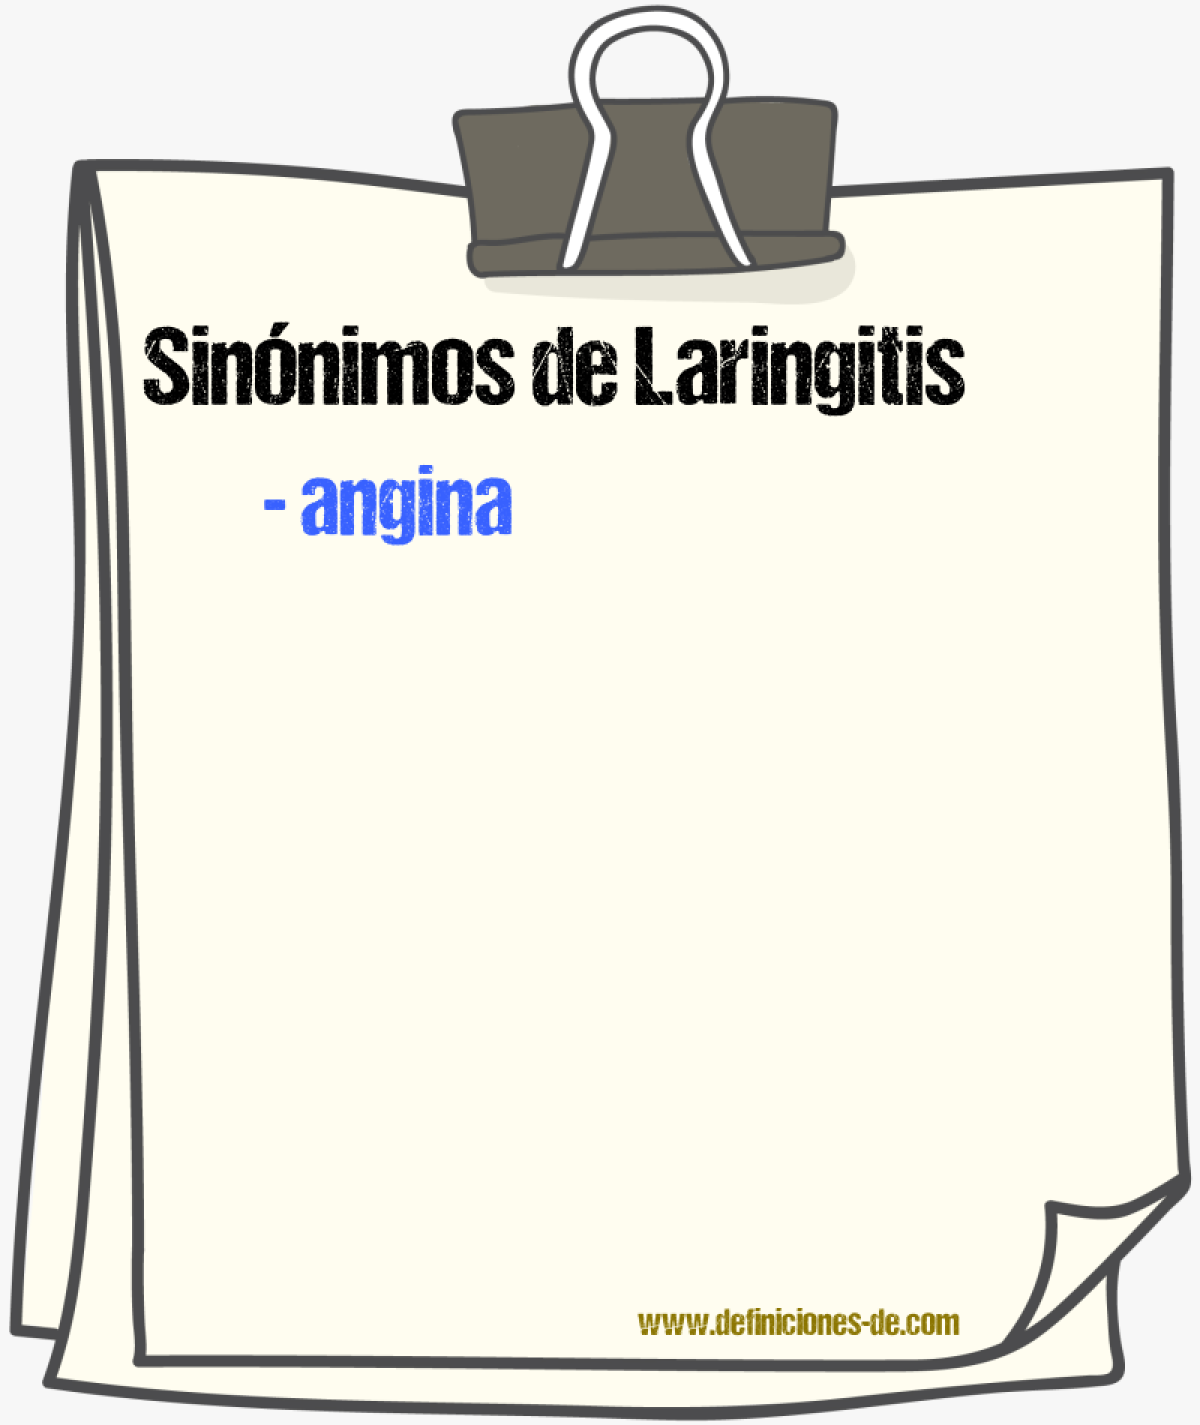 Sinnimos de laringitis